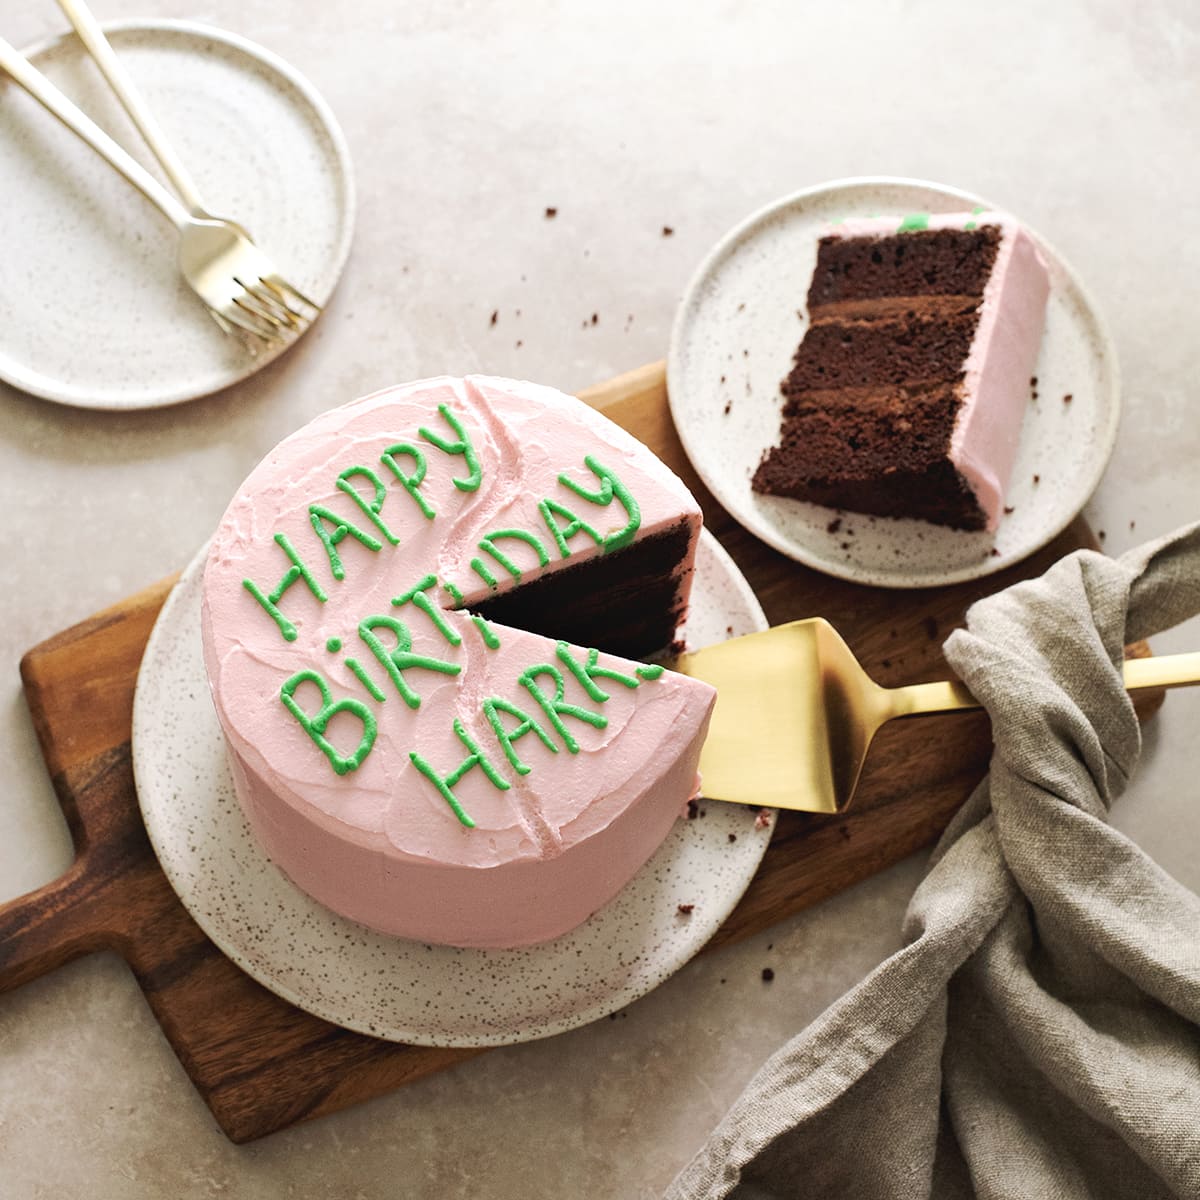 Harry Potter's Birthday Cake - Teak & Thyme